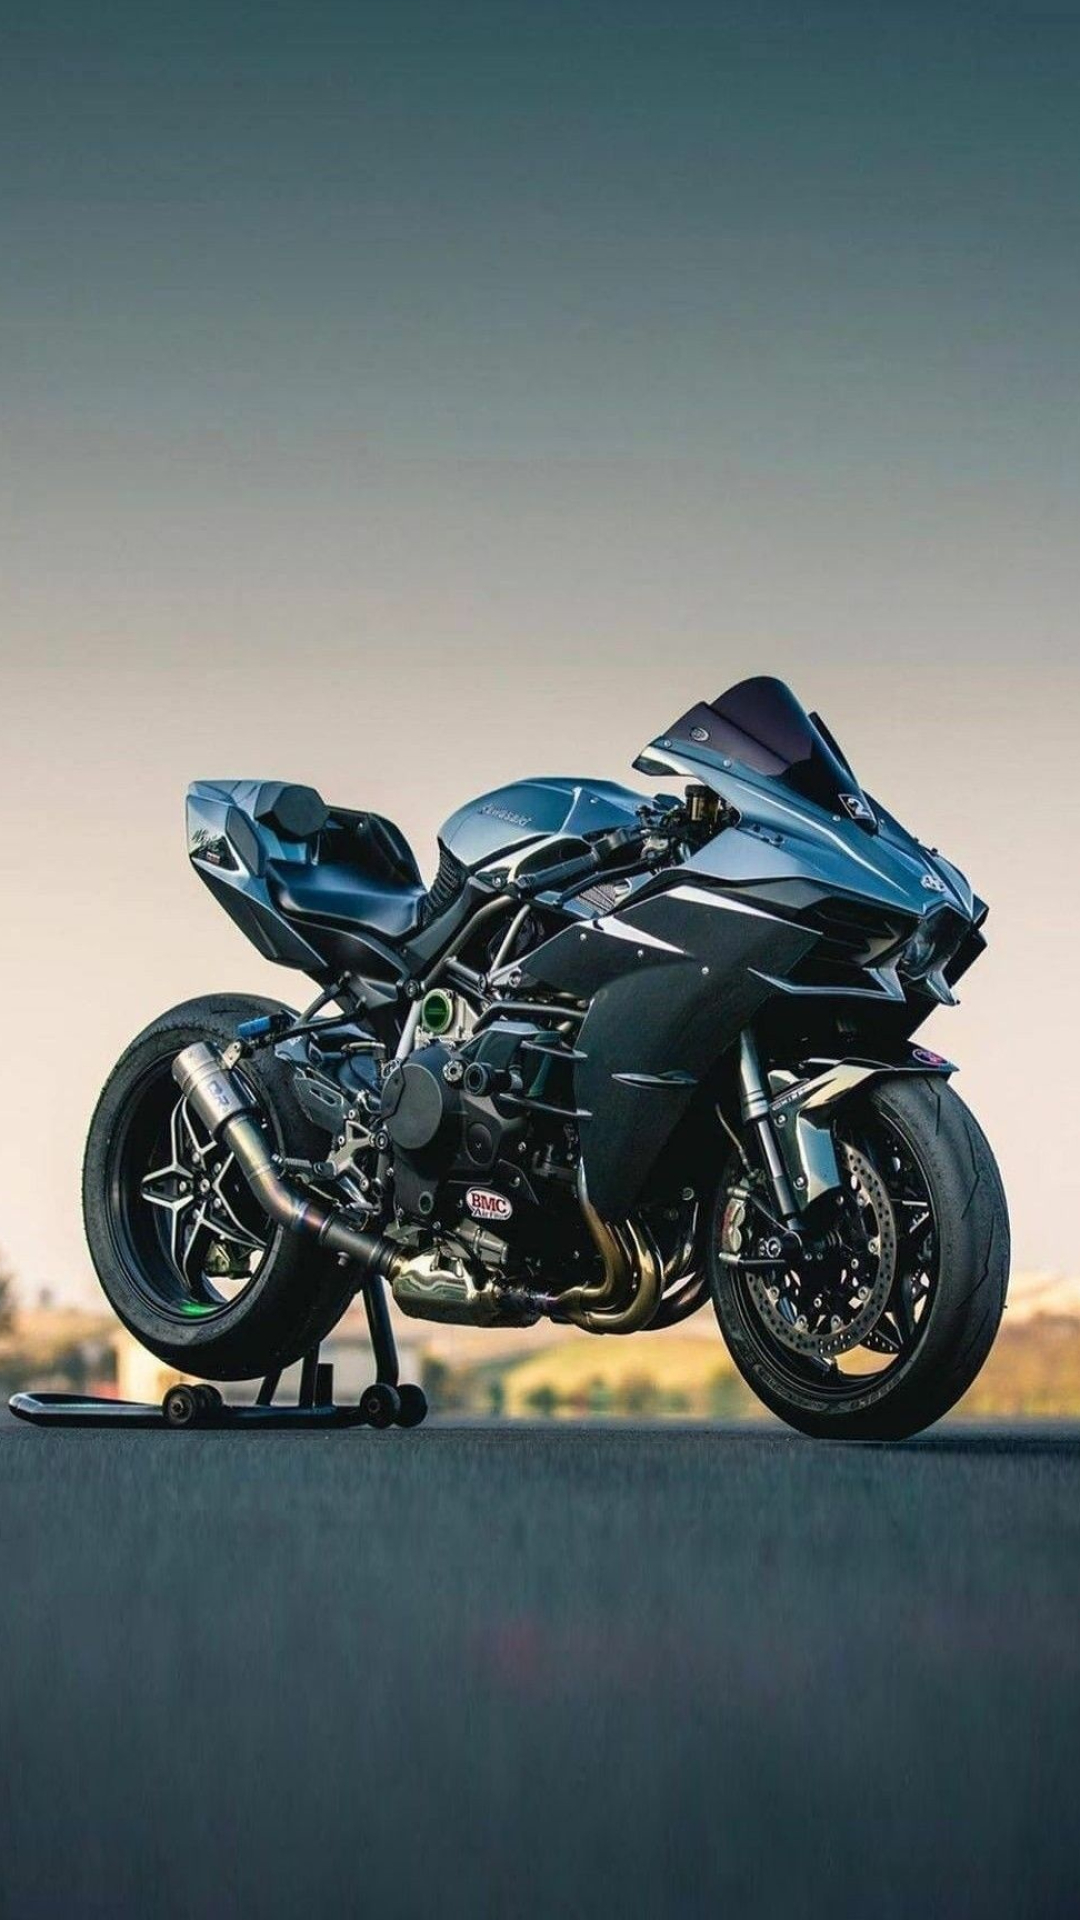 Kawasaki H2, Ninja bike, Powerful engine, Exhilarating ride, 1080x1920 Full HD Phone